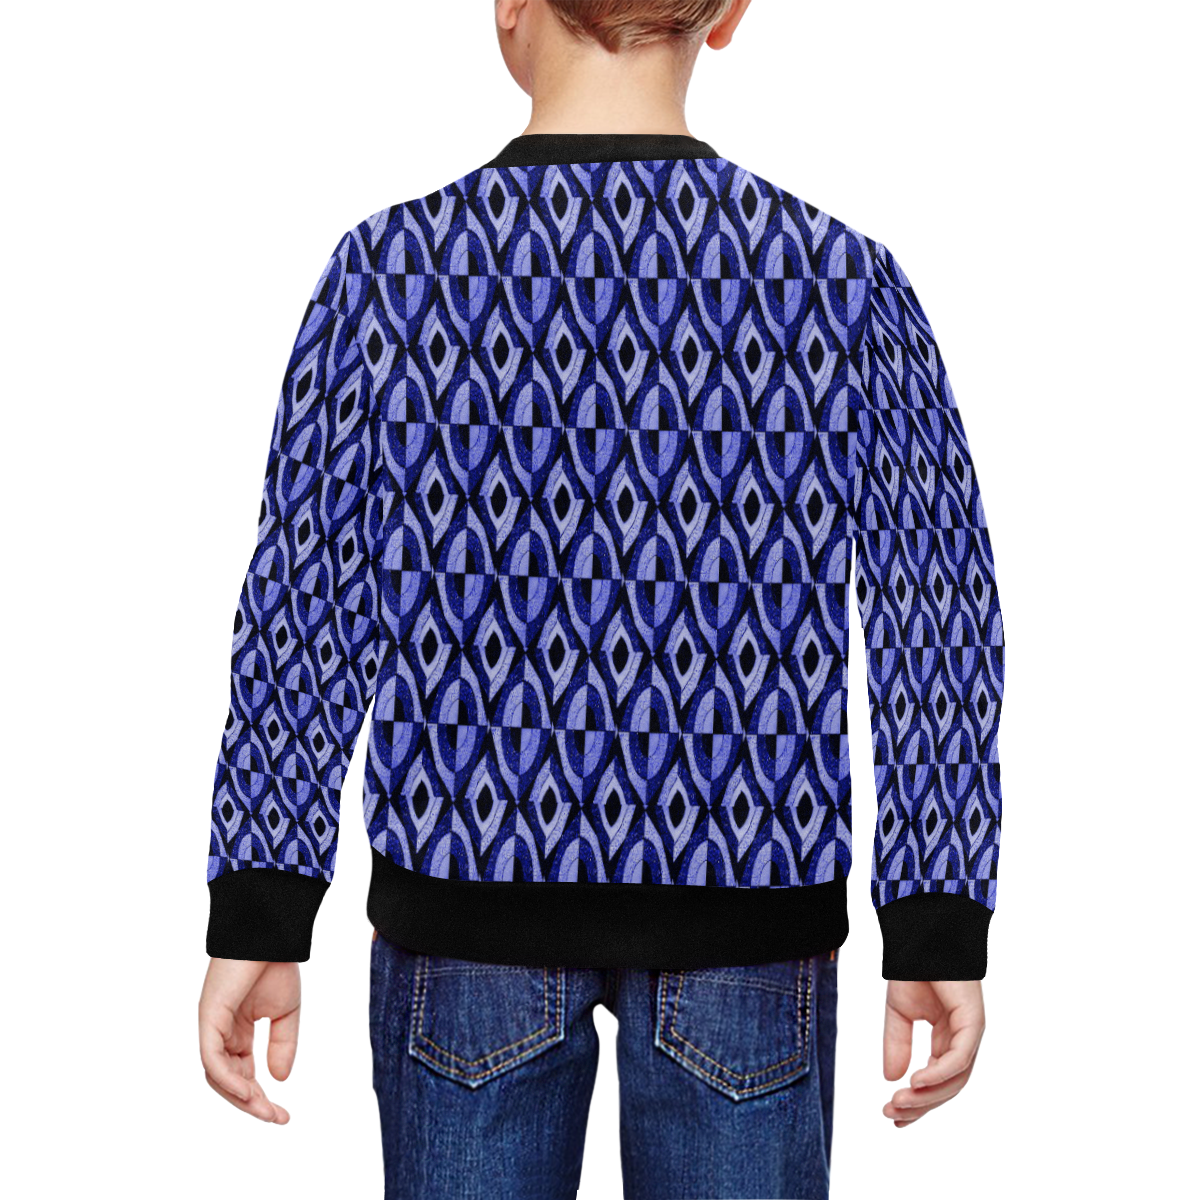 geometric blue All Over Print Crewneck Sweatshirt for Kids (Model H29)